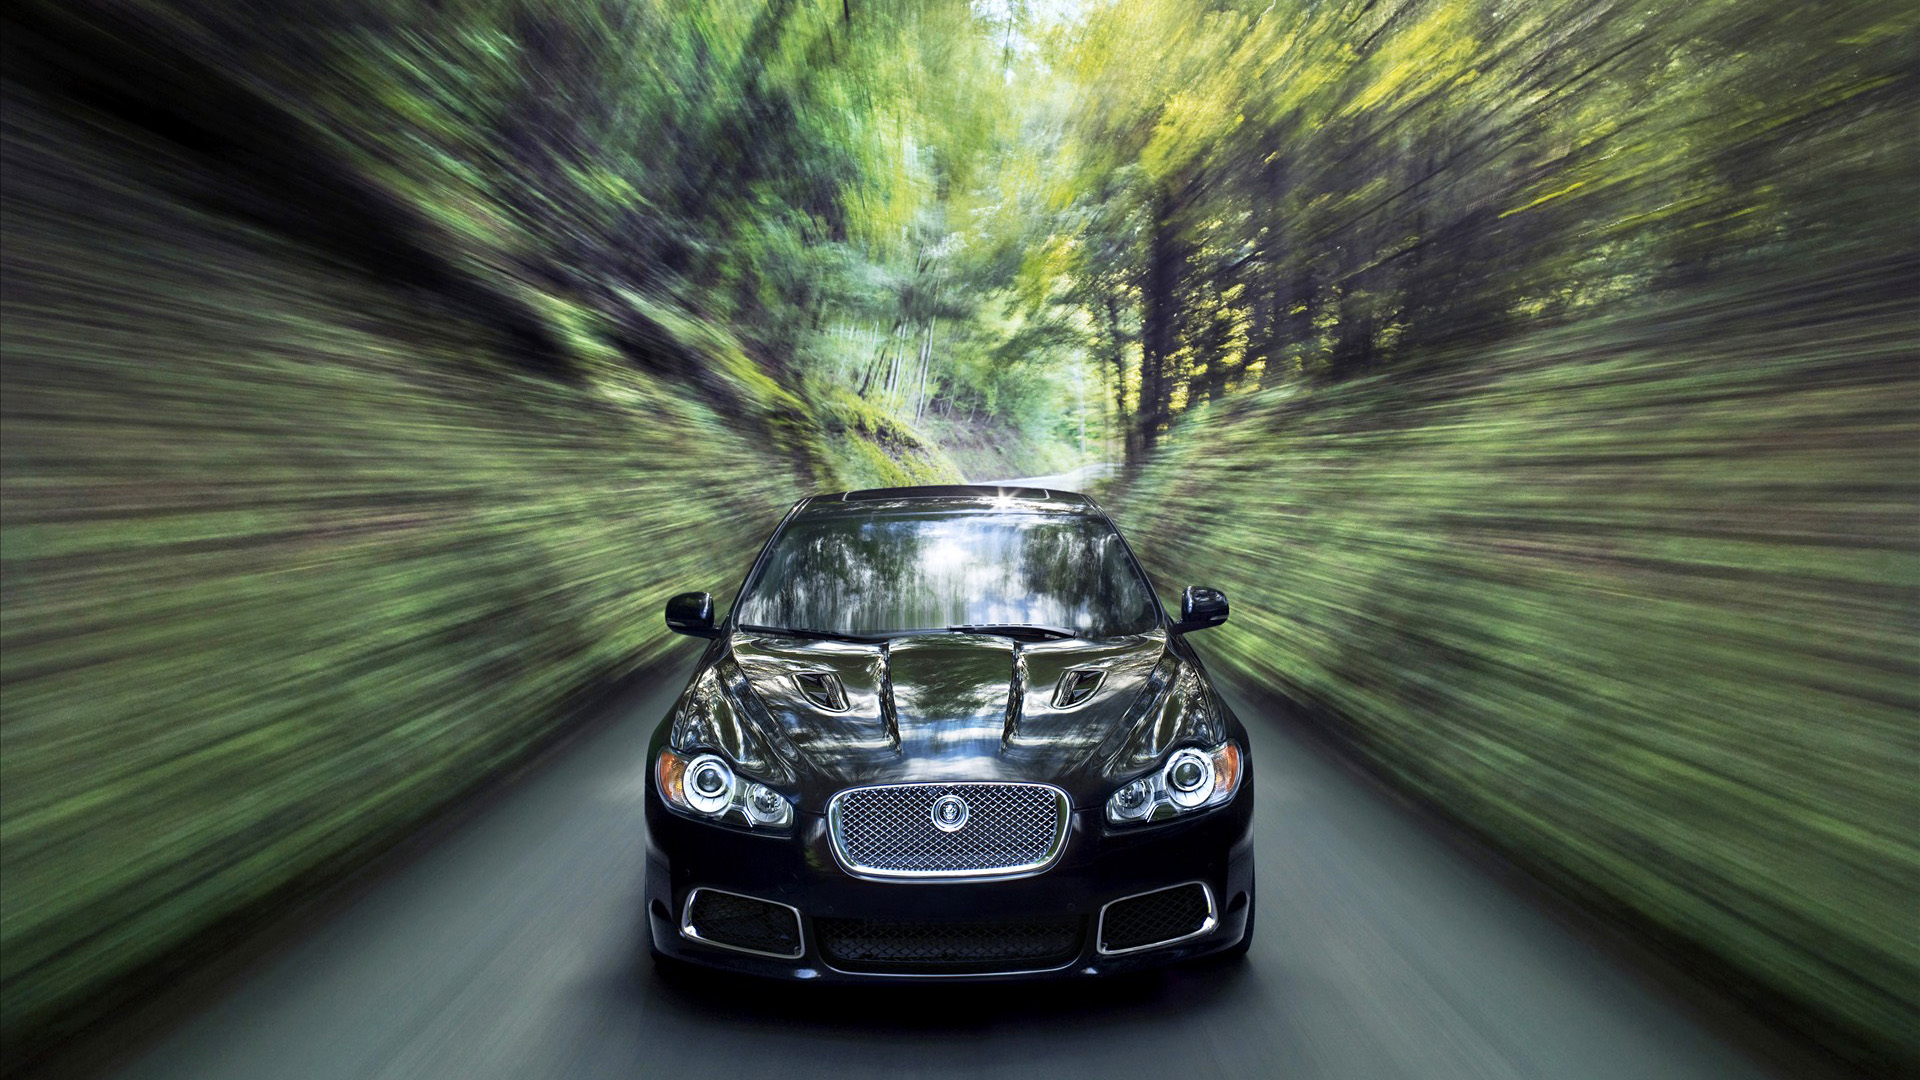  2010 Jaguar XFR Wallpaper.